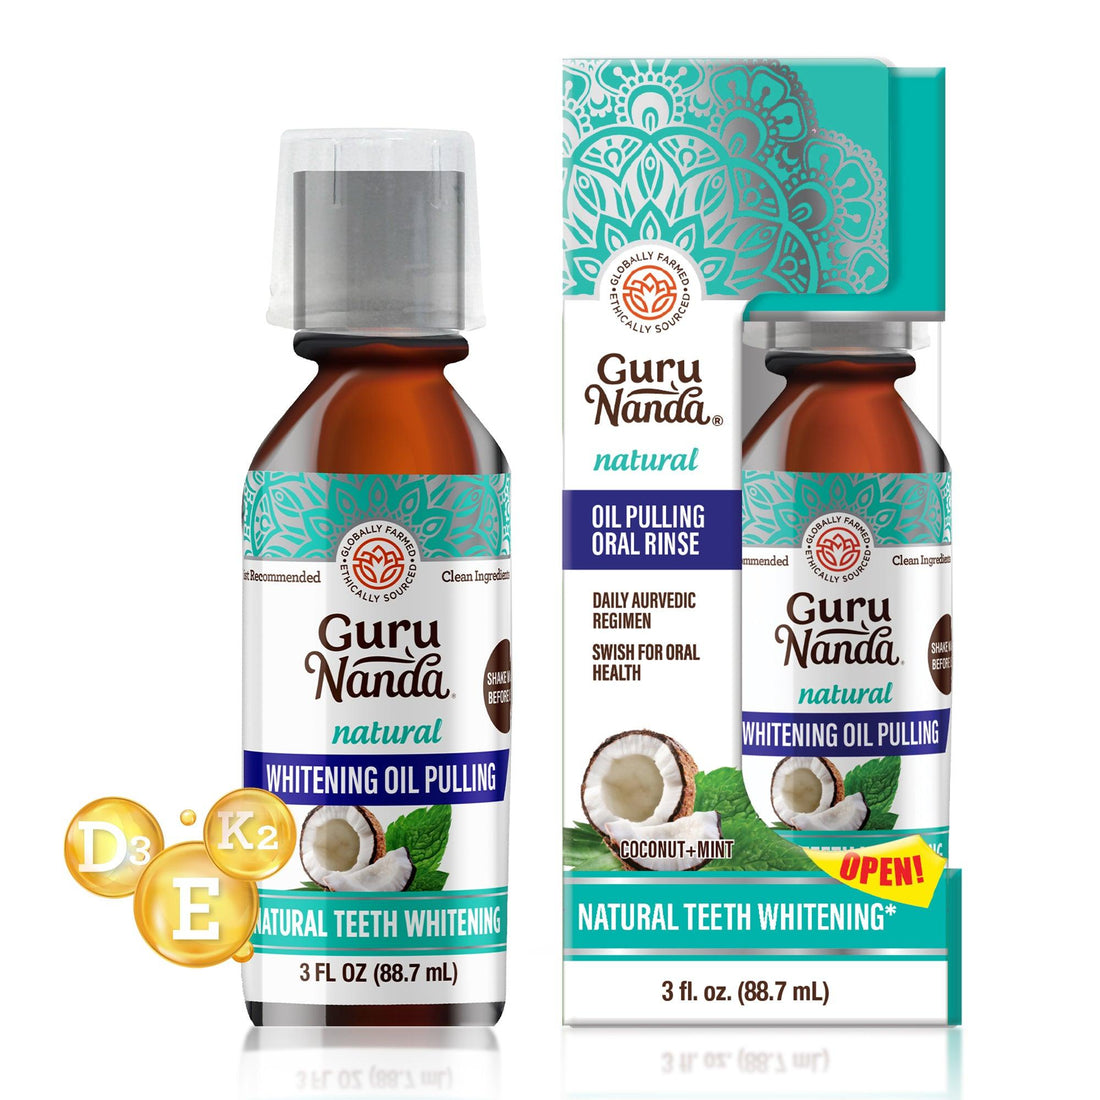 Cocomint Pulling Oil with 7 Essential Oils &amp; Vitamins D3, E &amp; K2 (Mickey D Formula) - 3 oz - GuruNanda